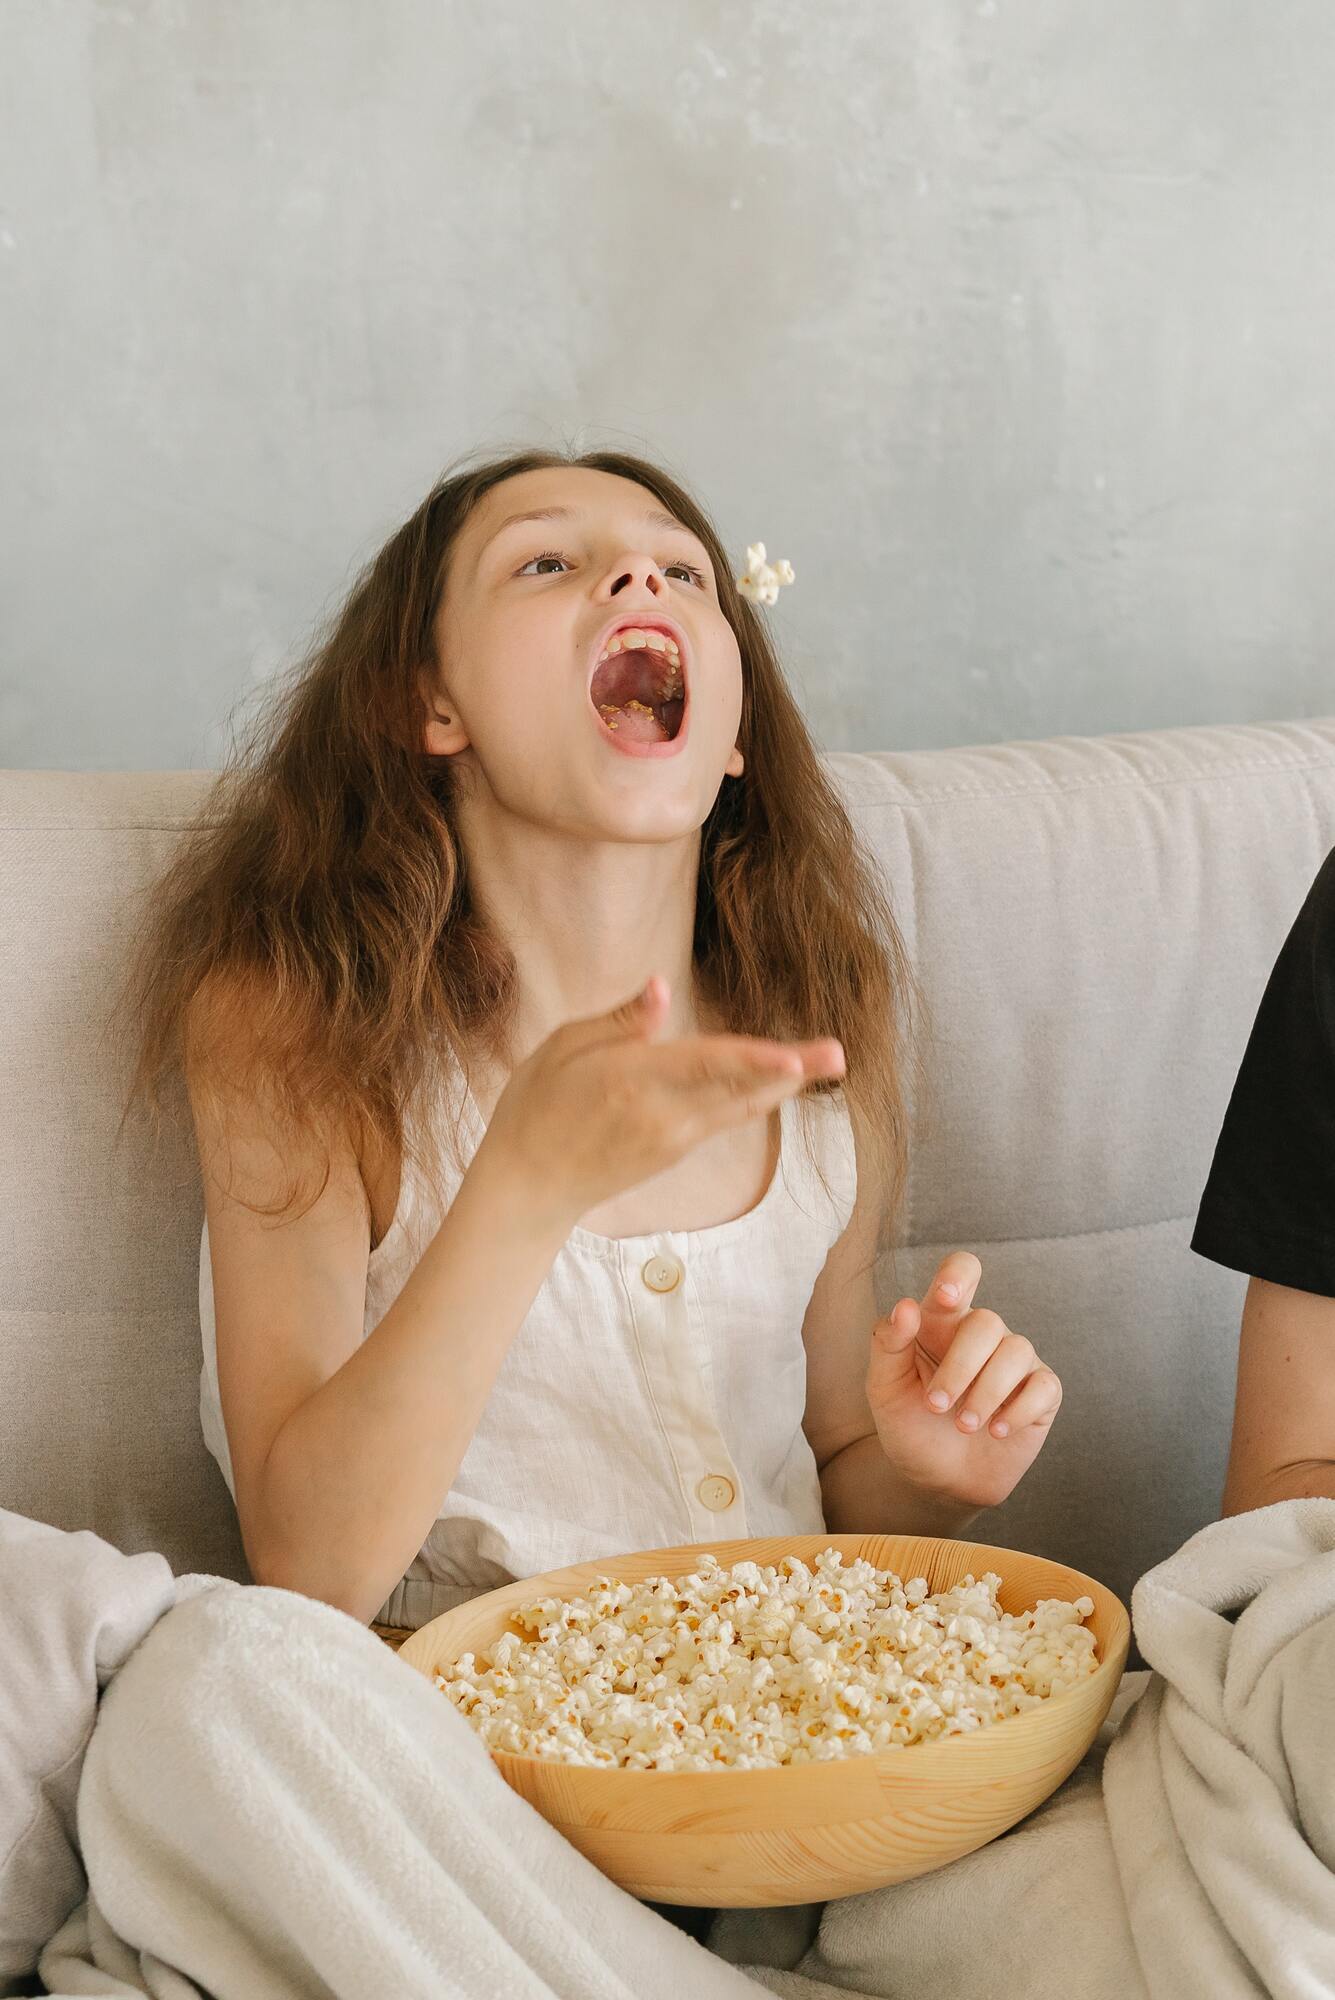 Popcorn is better not to eat for children